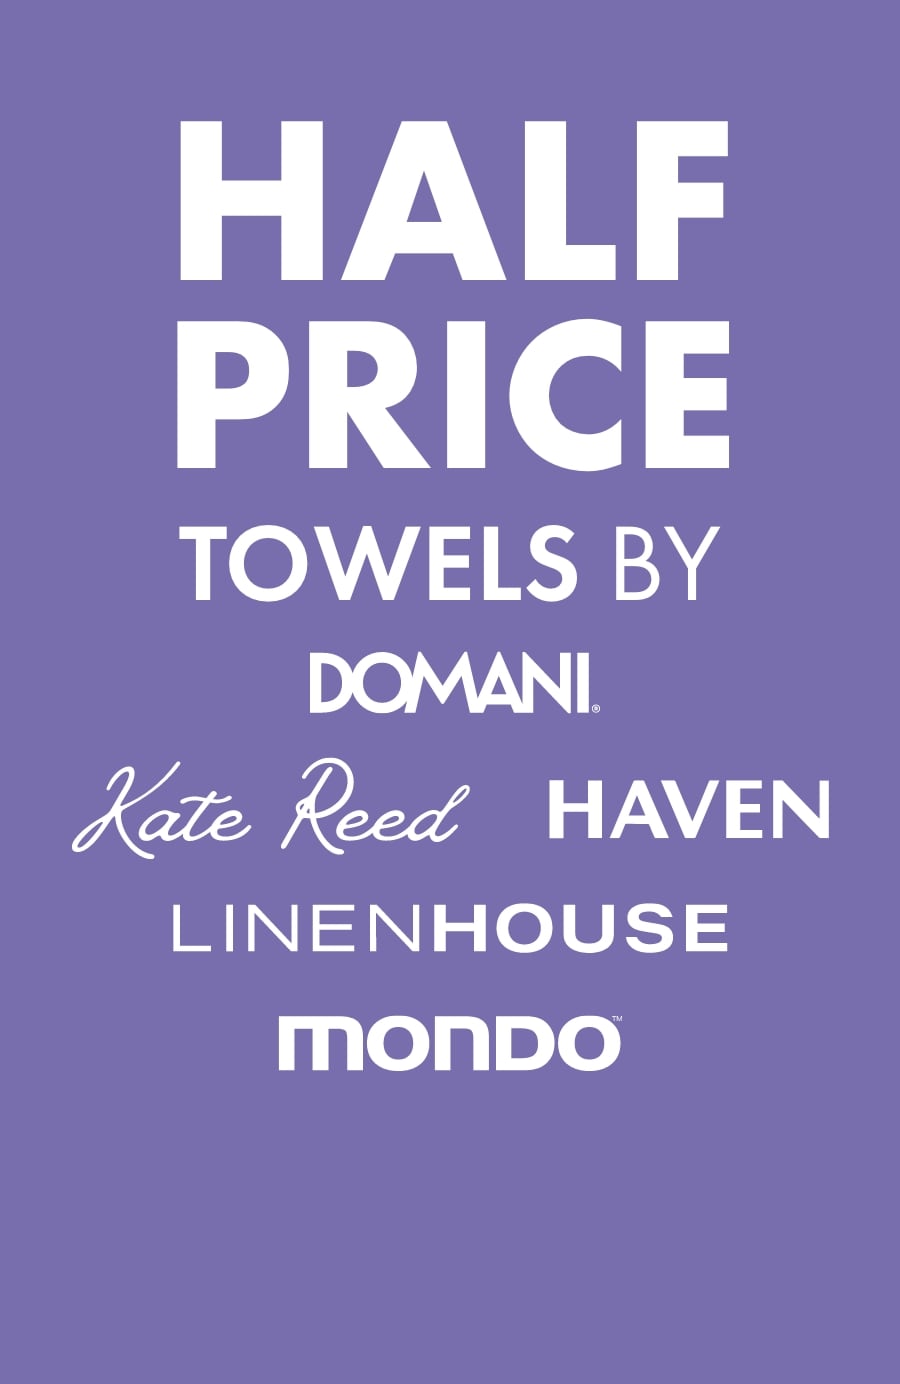 Half Price Towels